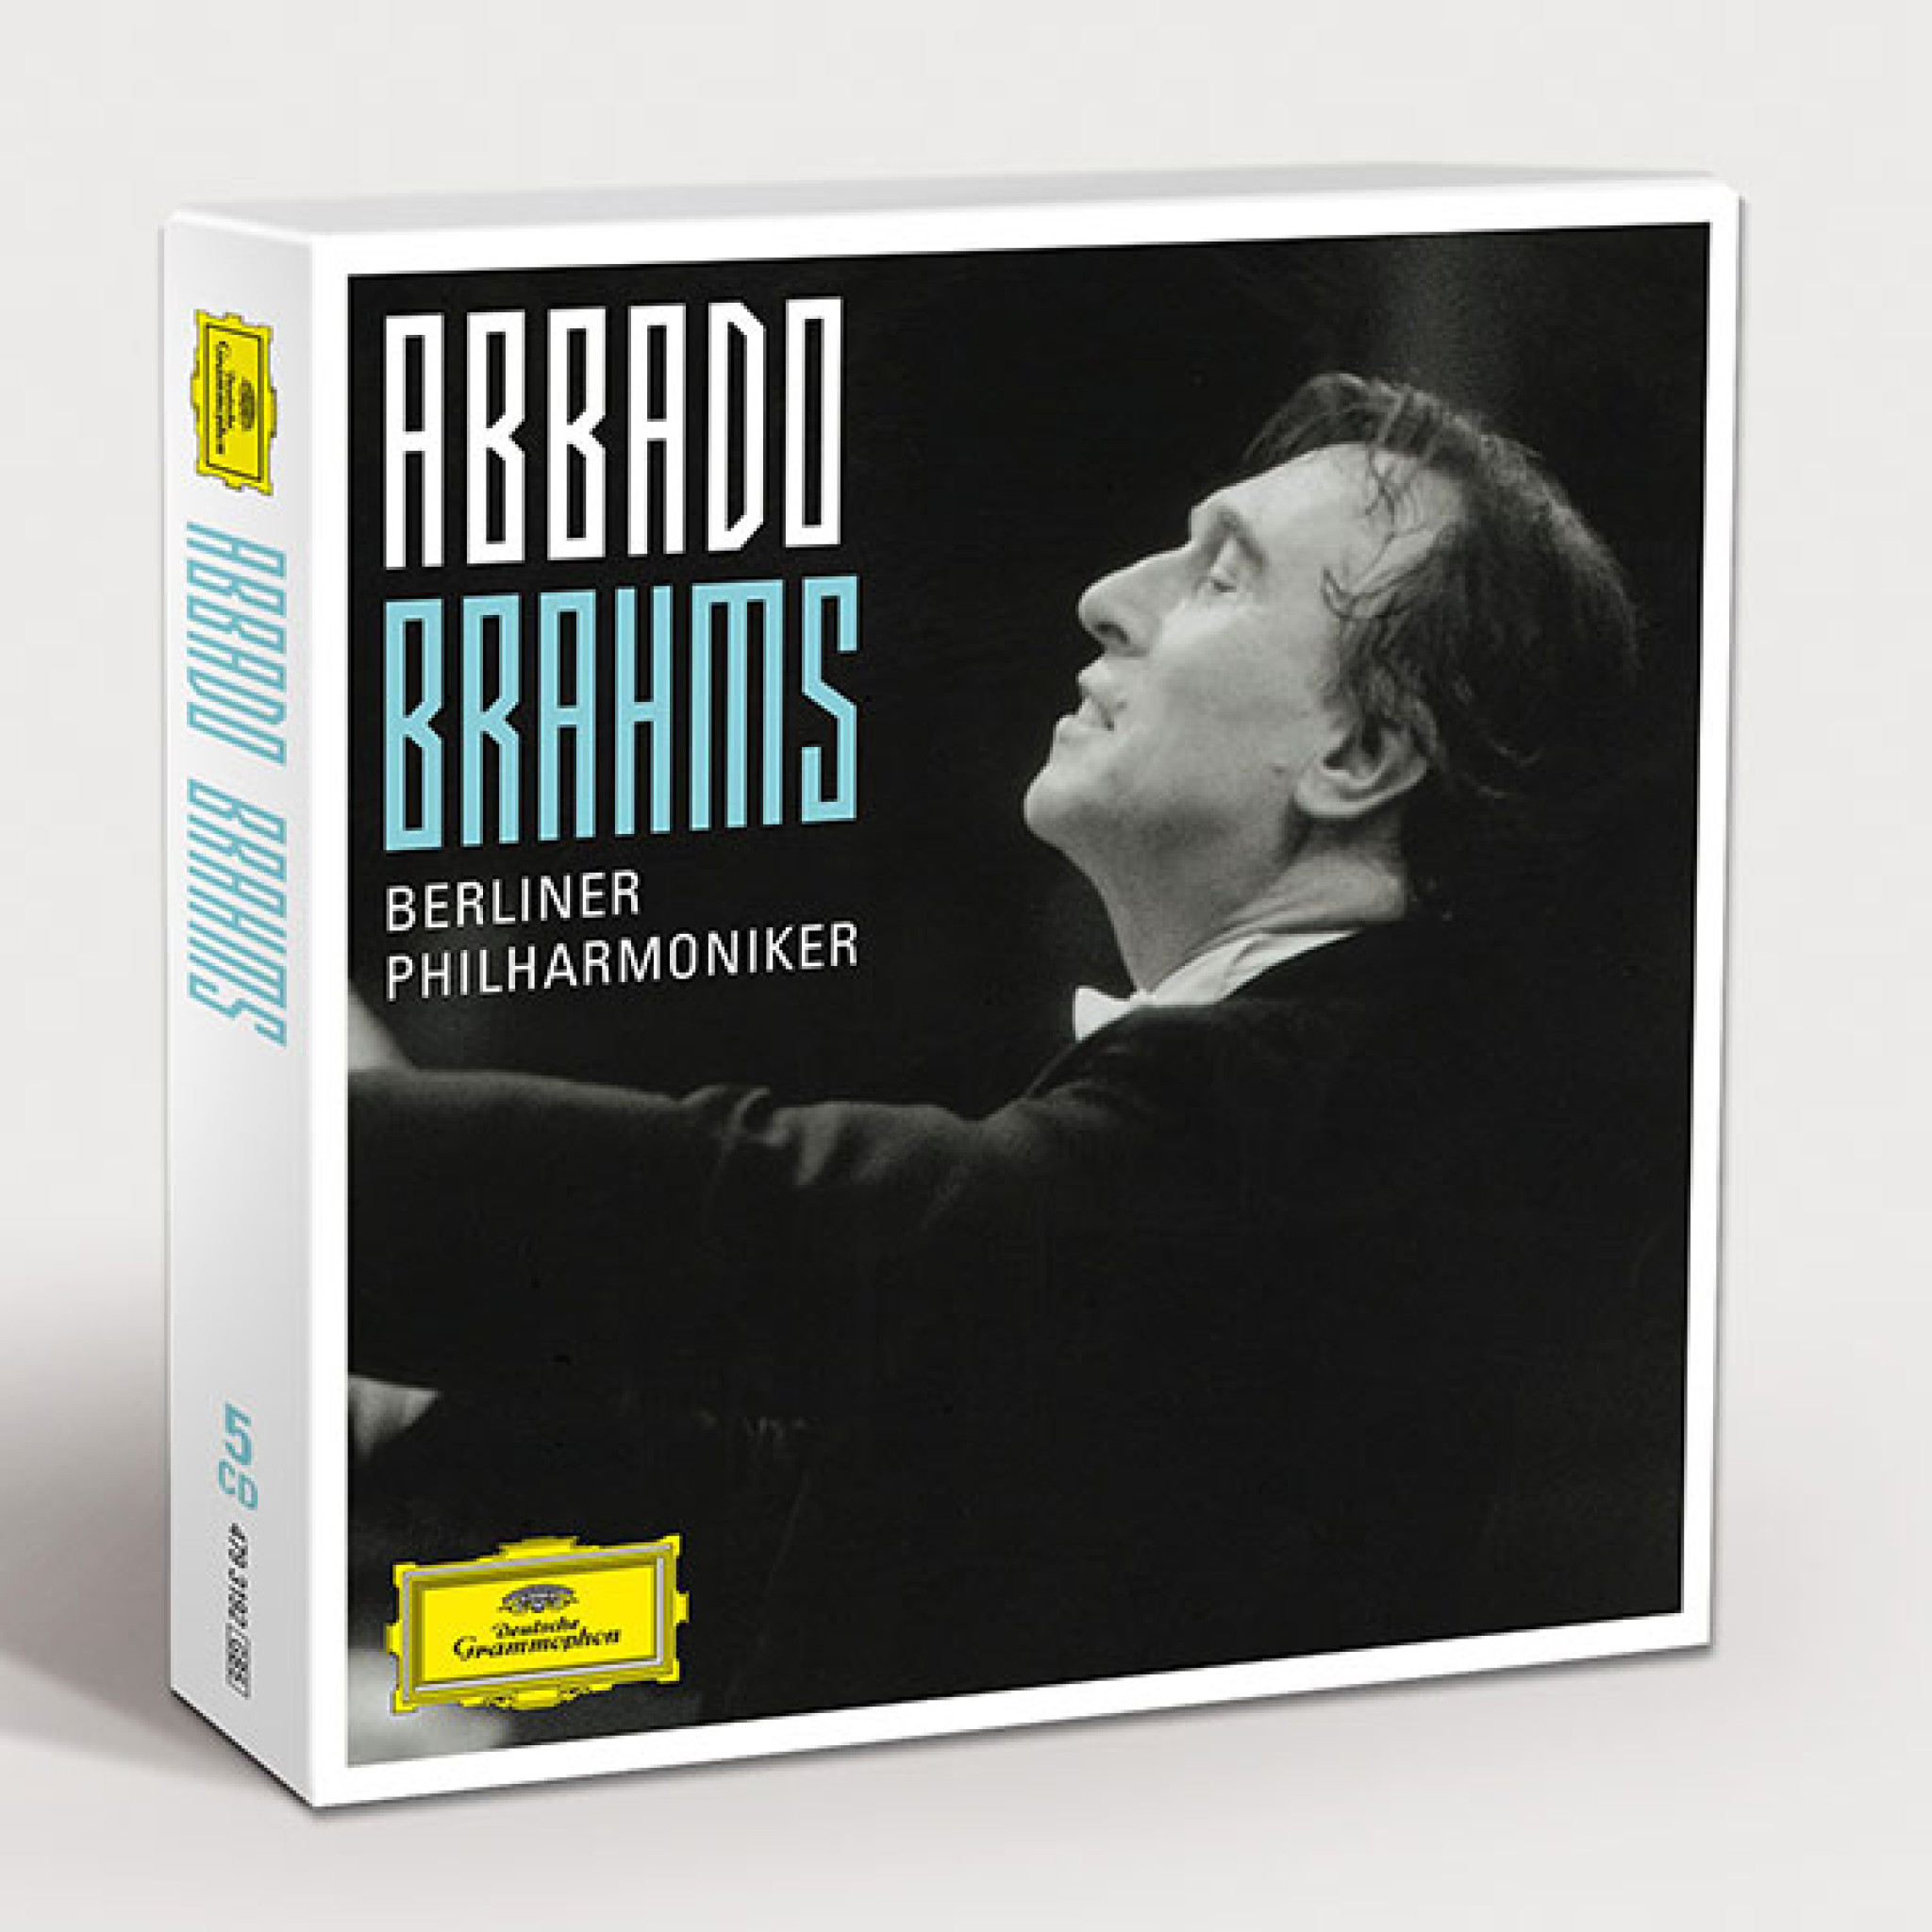 Abbado - Brahms